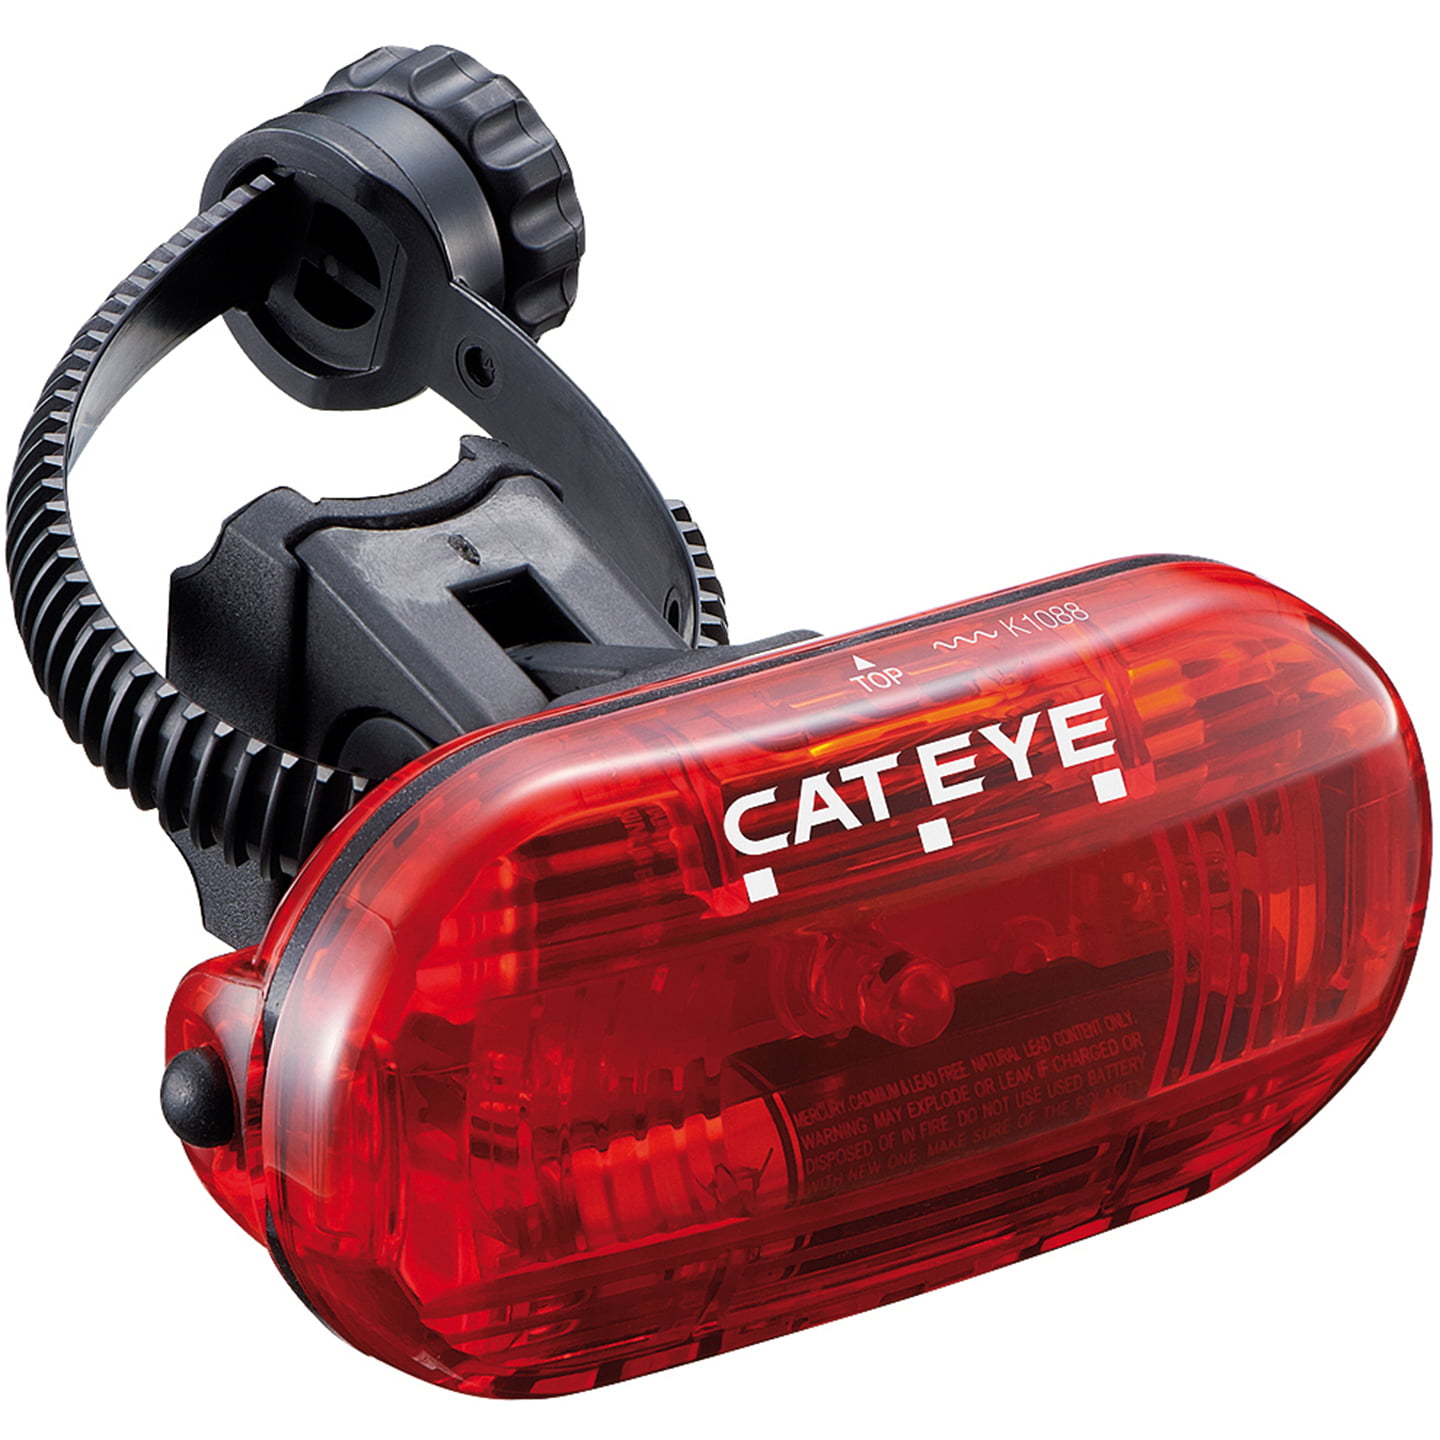 CATEYE Omni 3G Rear Light Rear Light, Bicycle light, Bike accessories